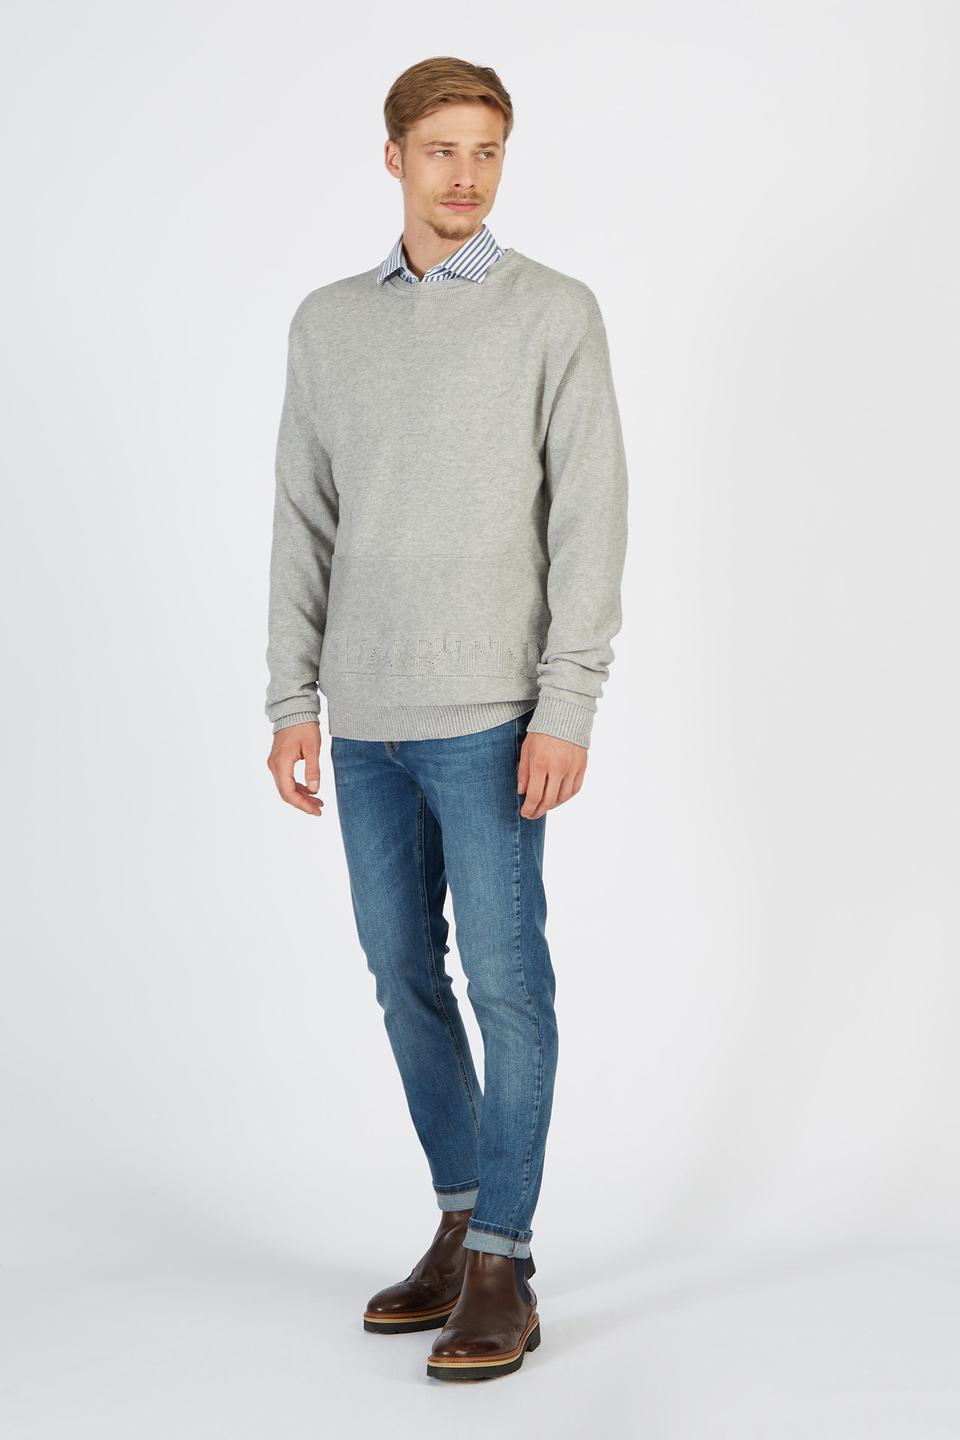 Men's short-sleeved shirt in 100% cotton | La Martina - Official Online Shop